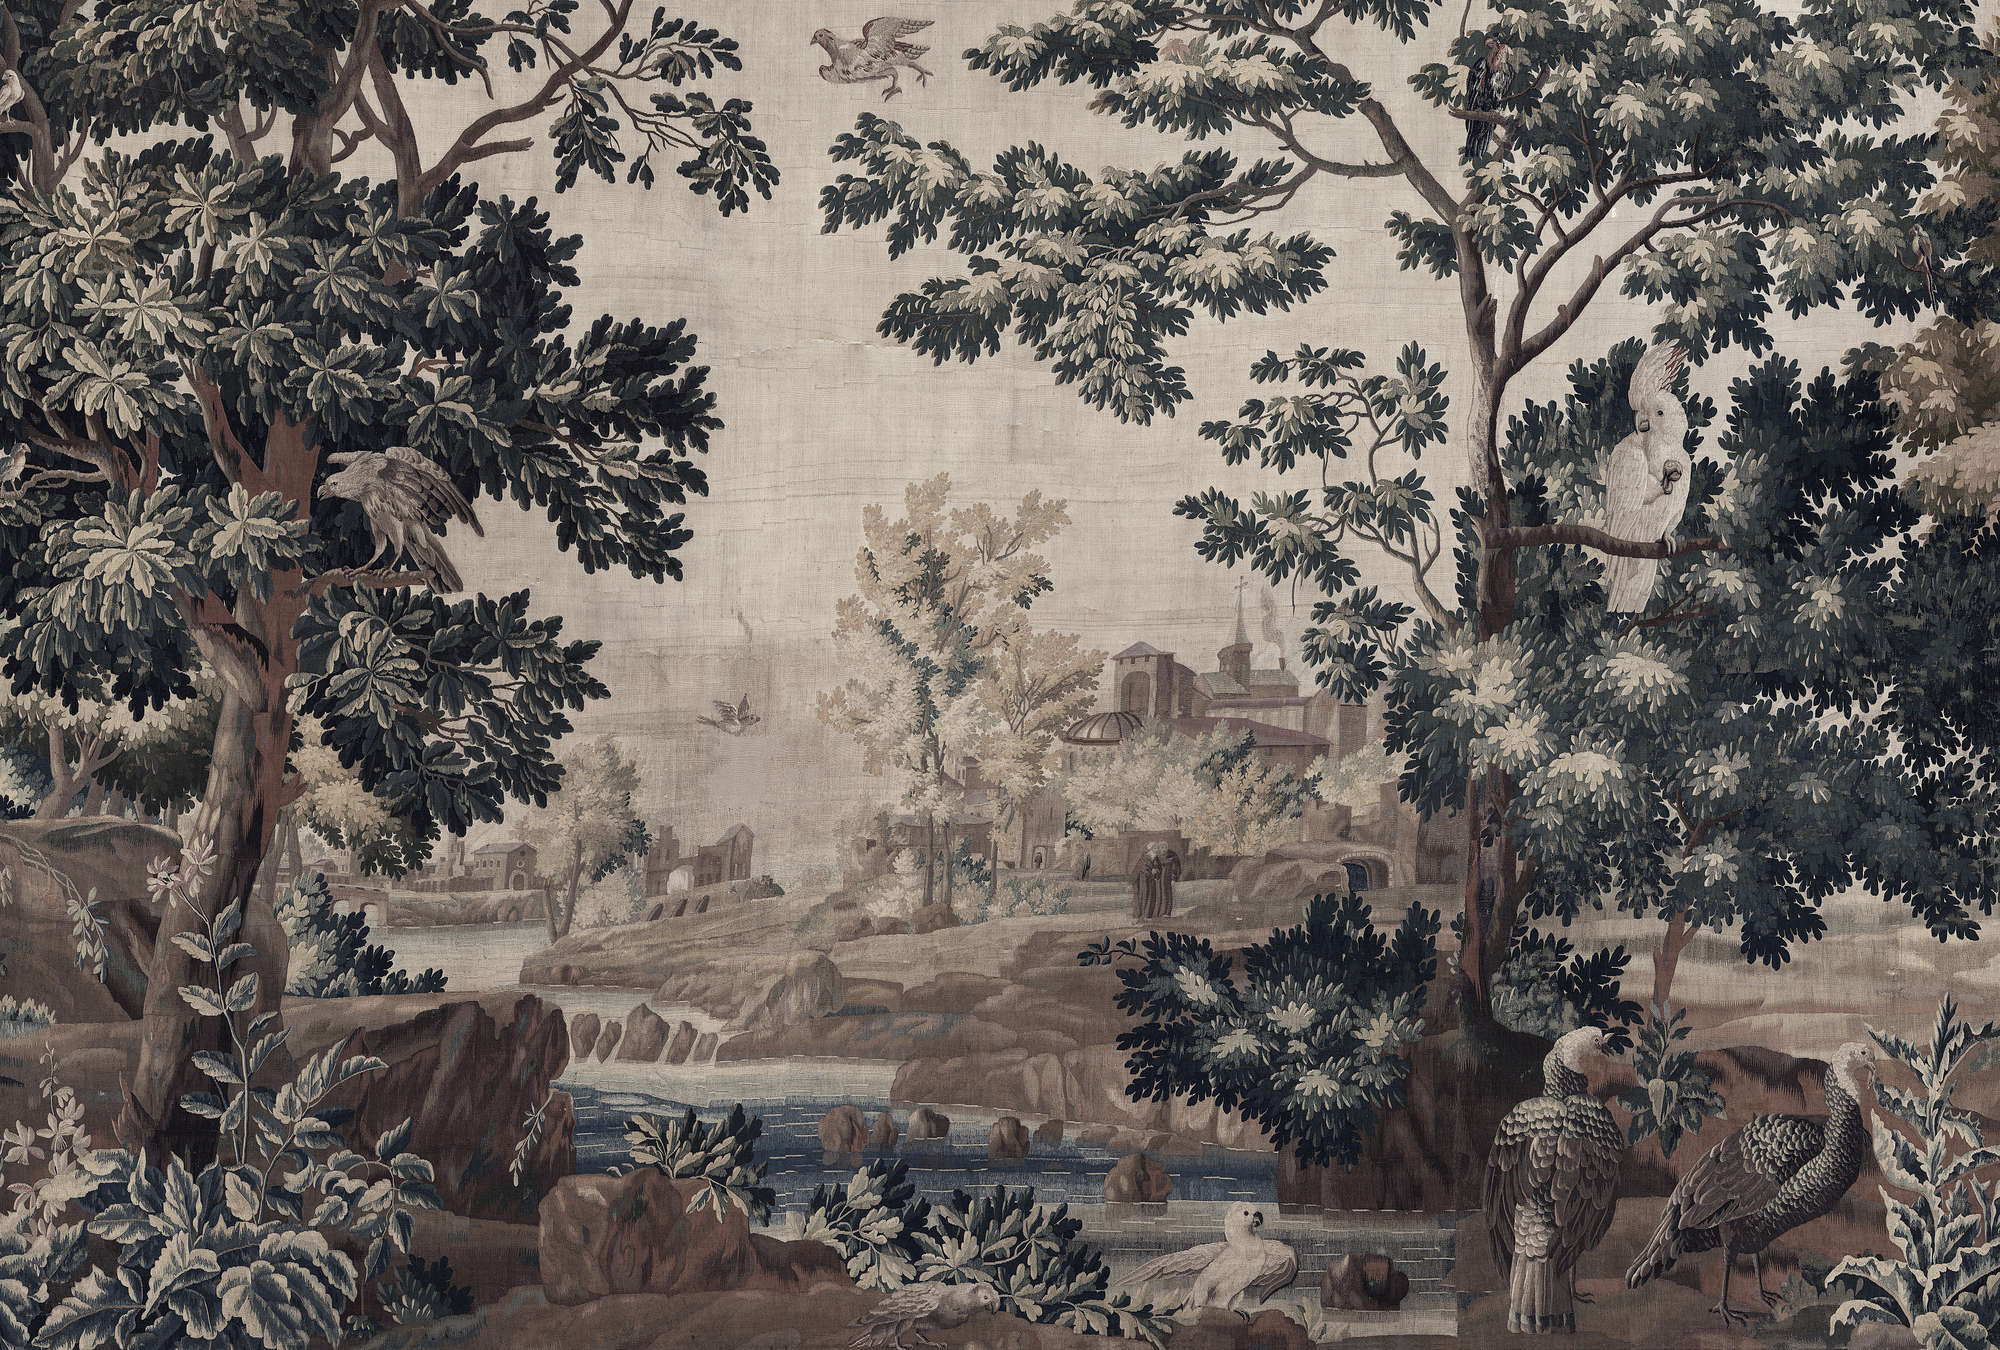             Gobelin Gallery 1 – Landschaft Fototapete historischer Wandteppich
        